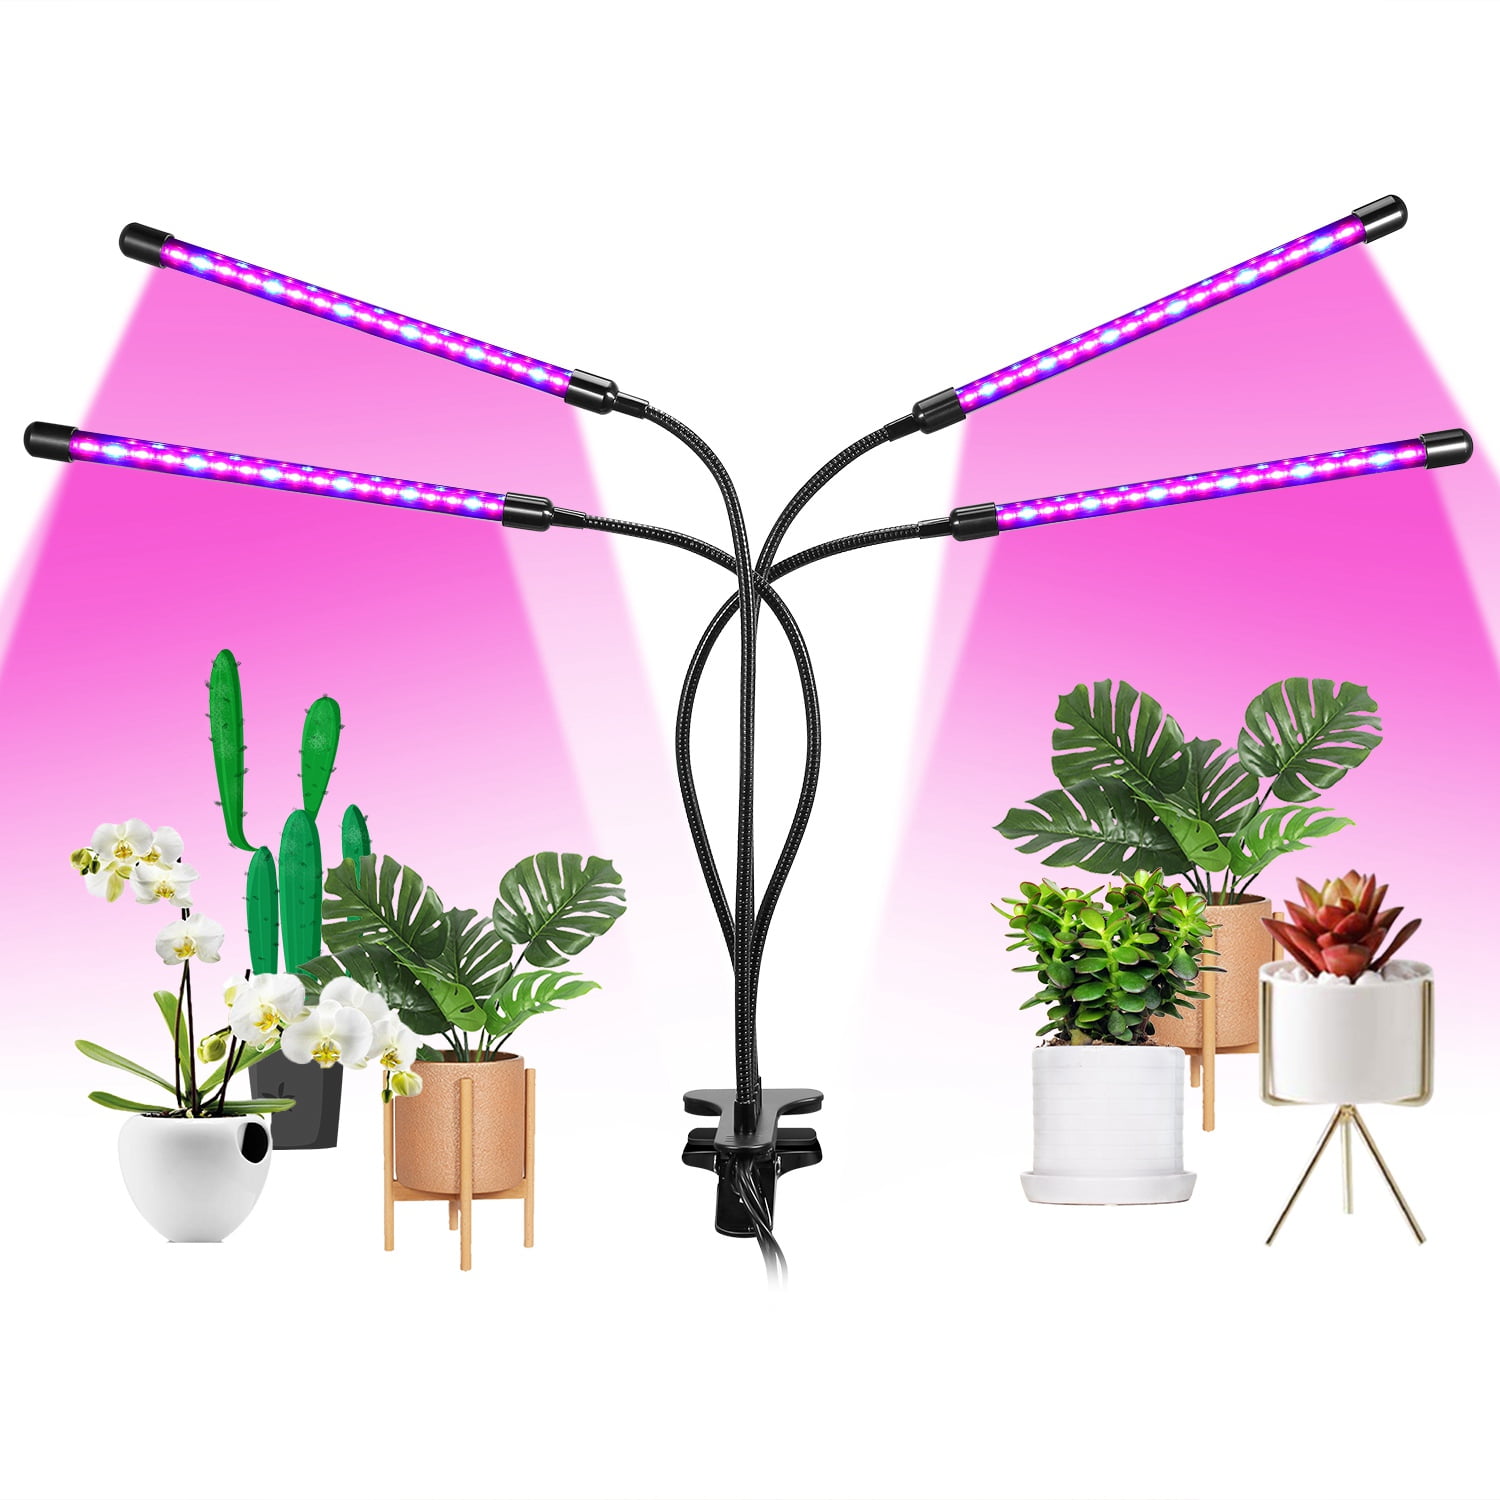 3W LED light grow lamp bulb full spectrum flower hydroponic indoor plant growth 